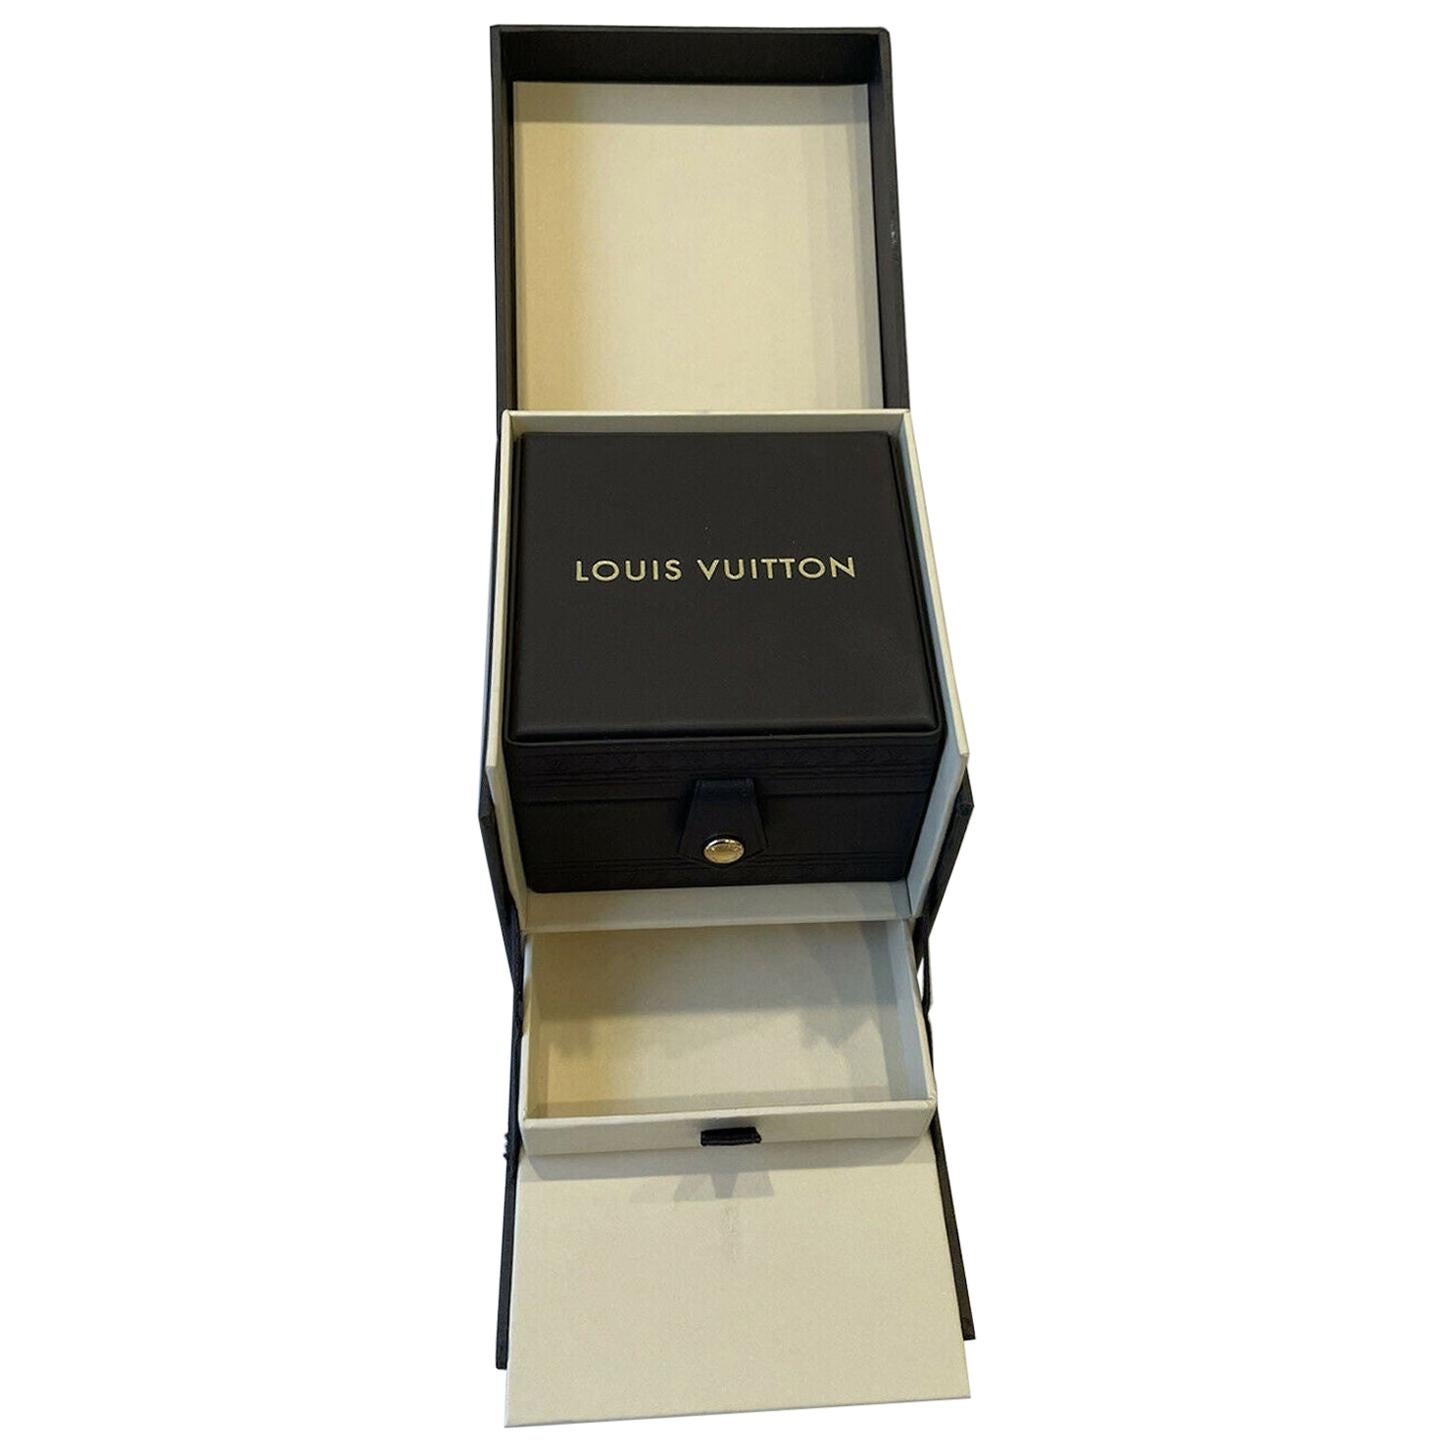 Authentic Louis Vuitton LV Box & Outer Box For Sale